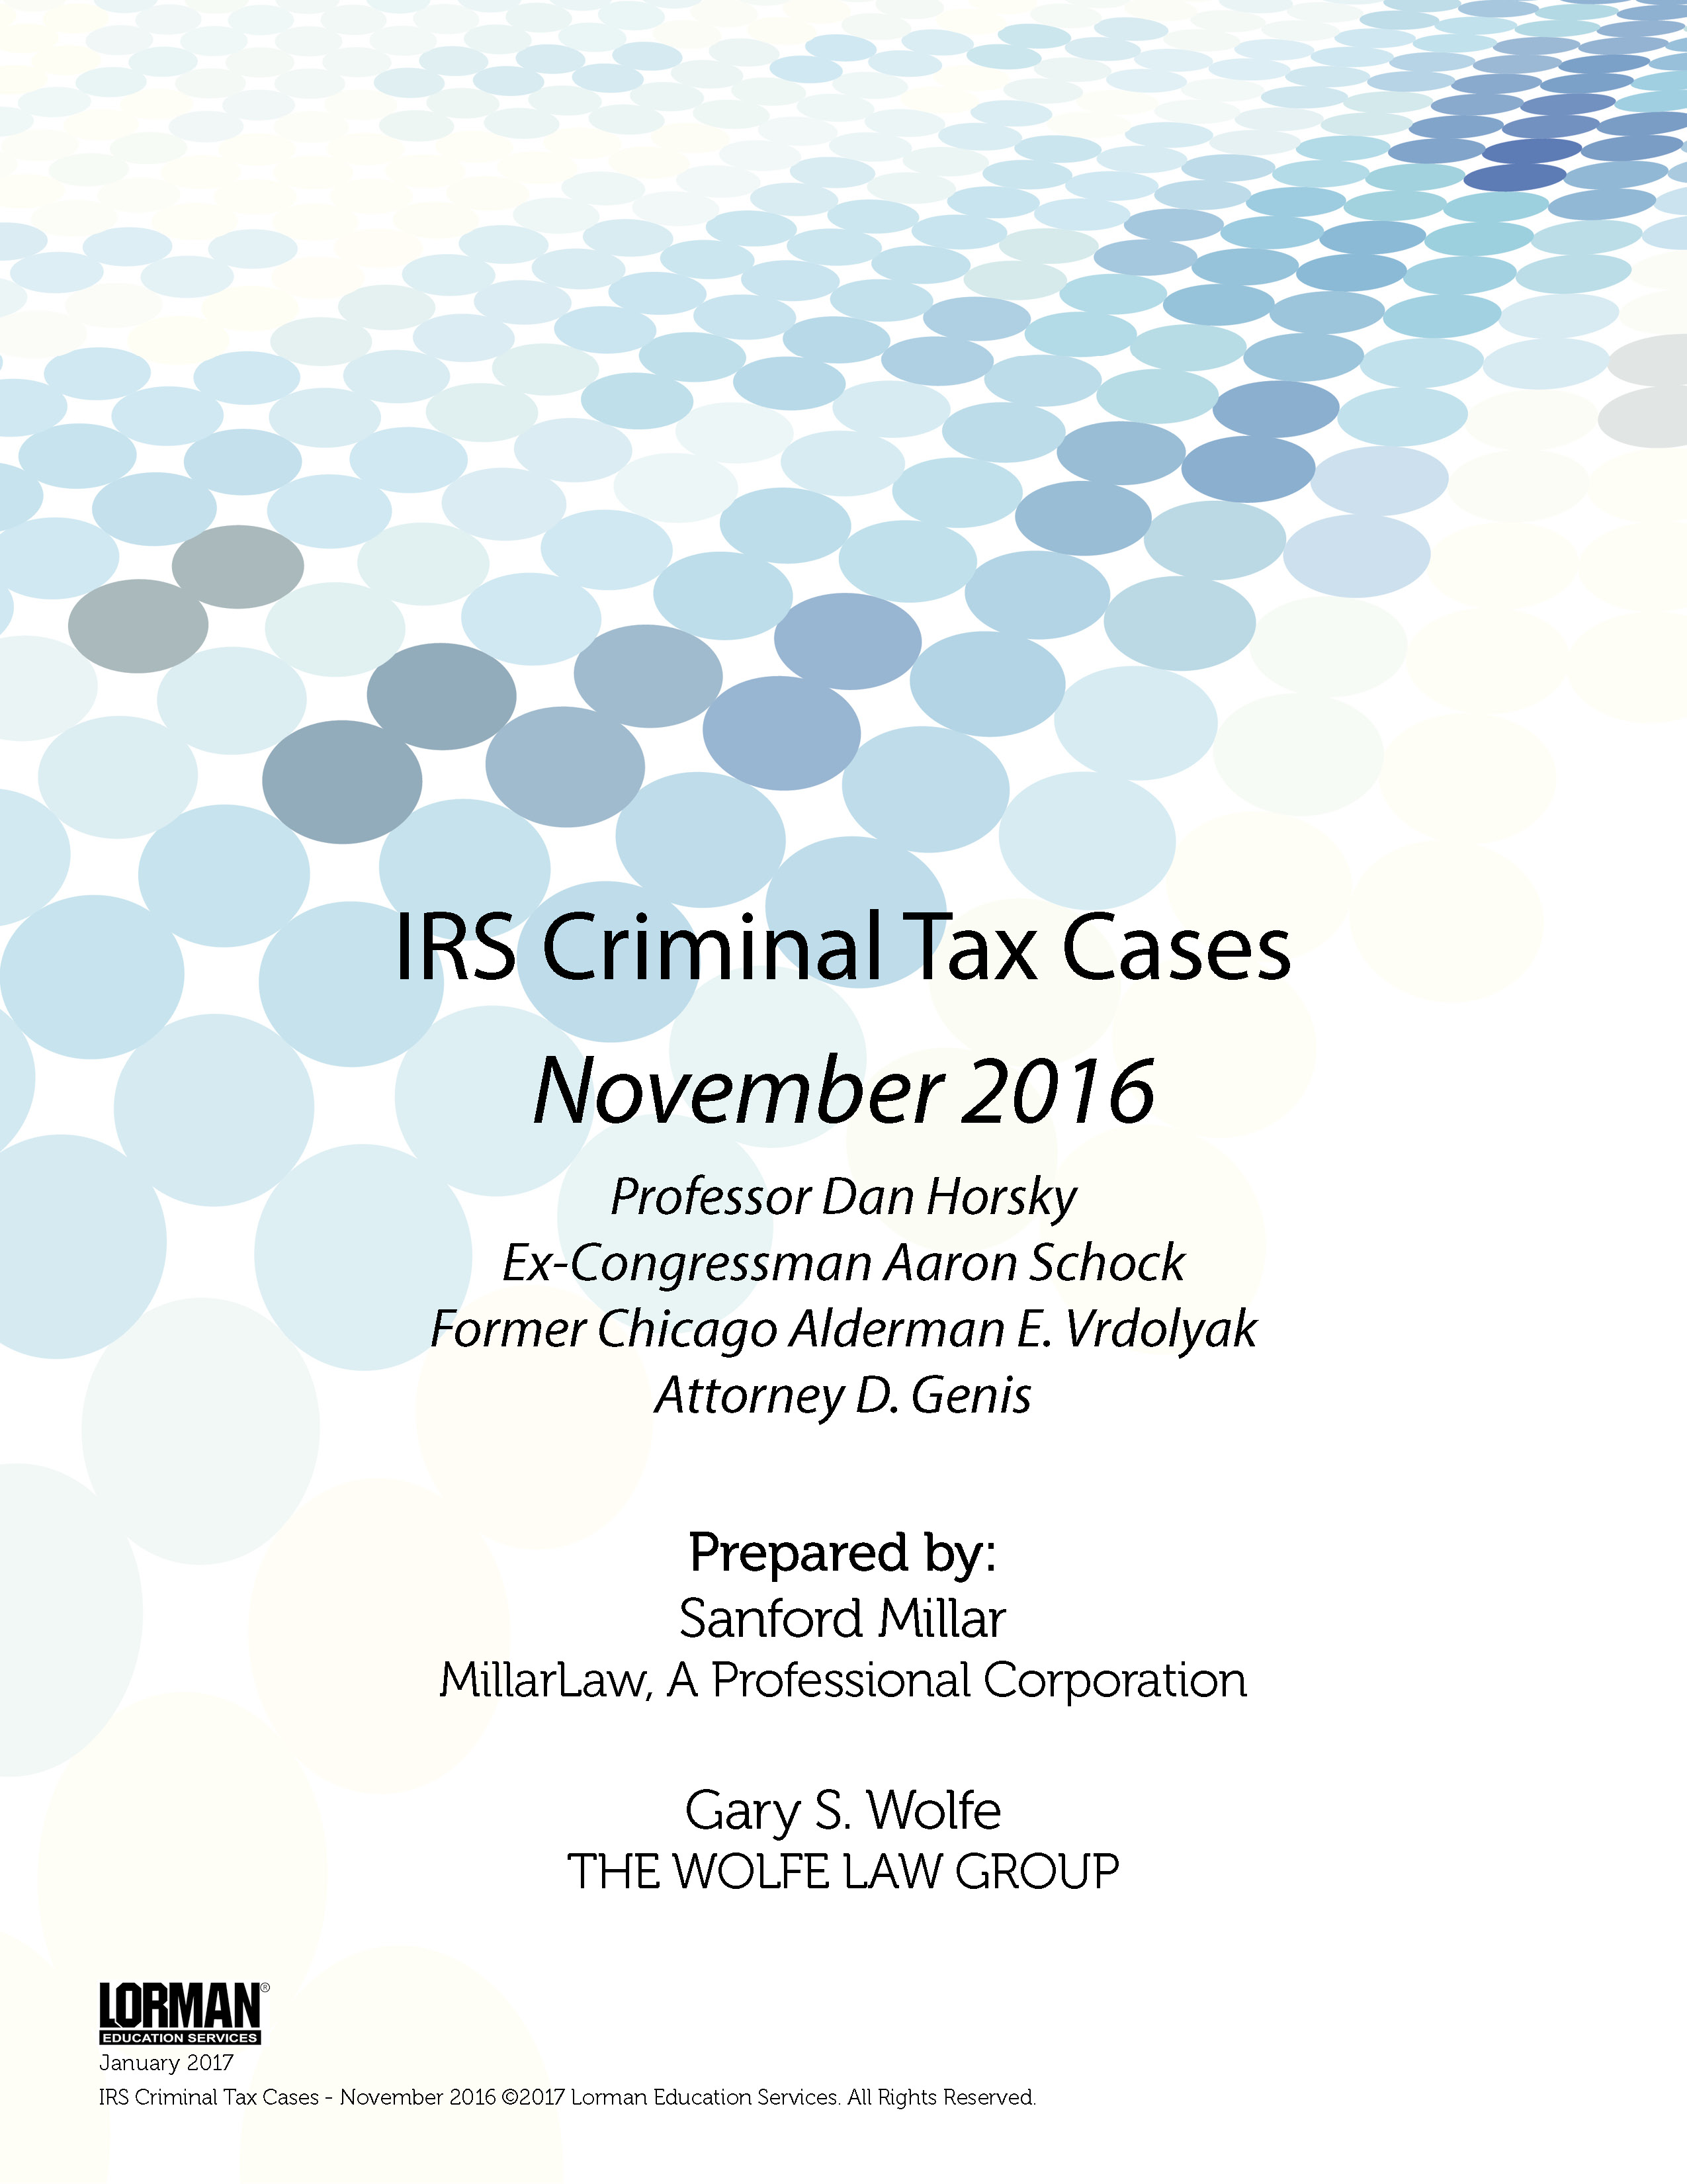 IRS Criminal Tax Cases - November 2016